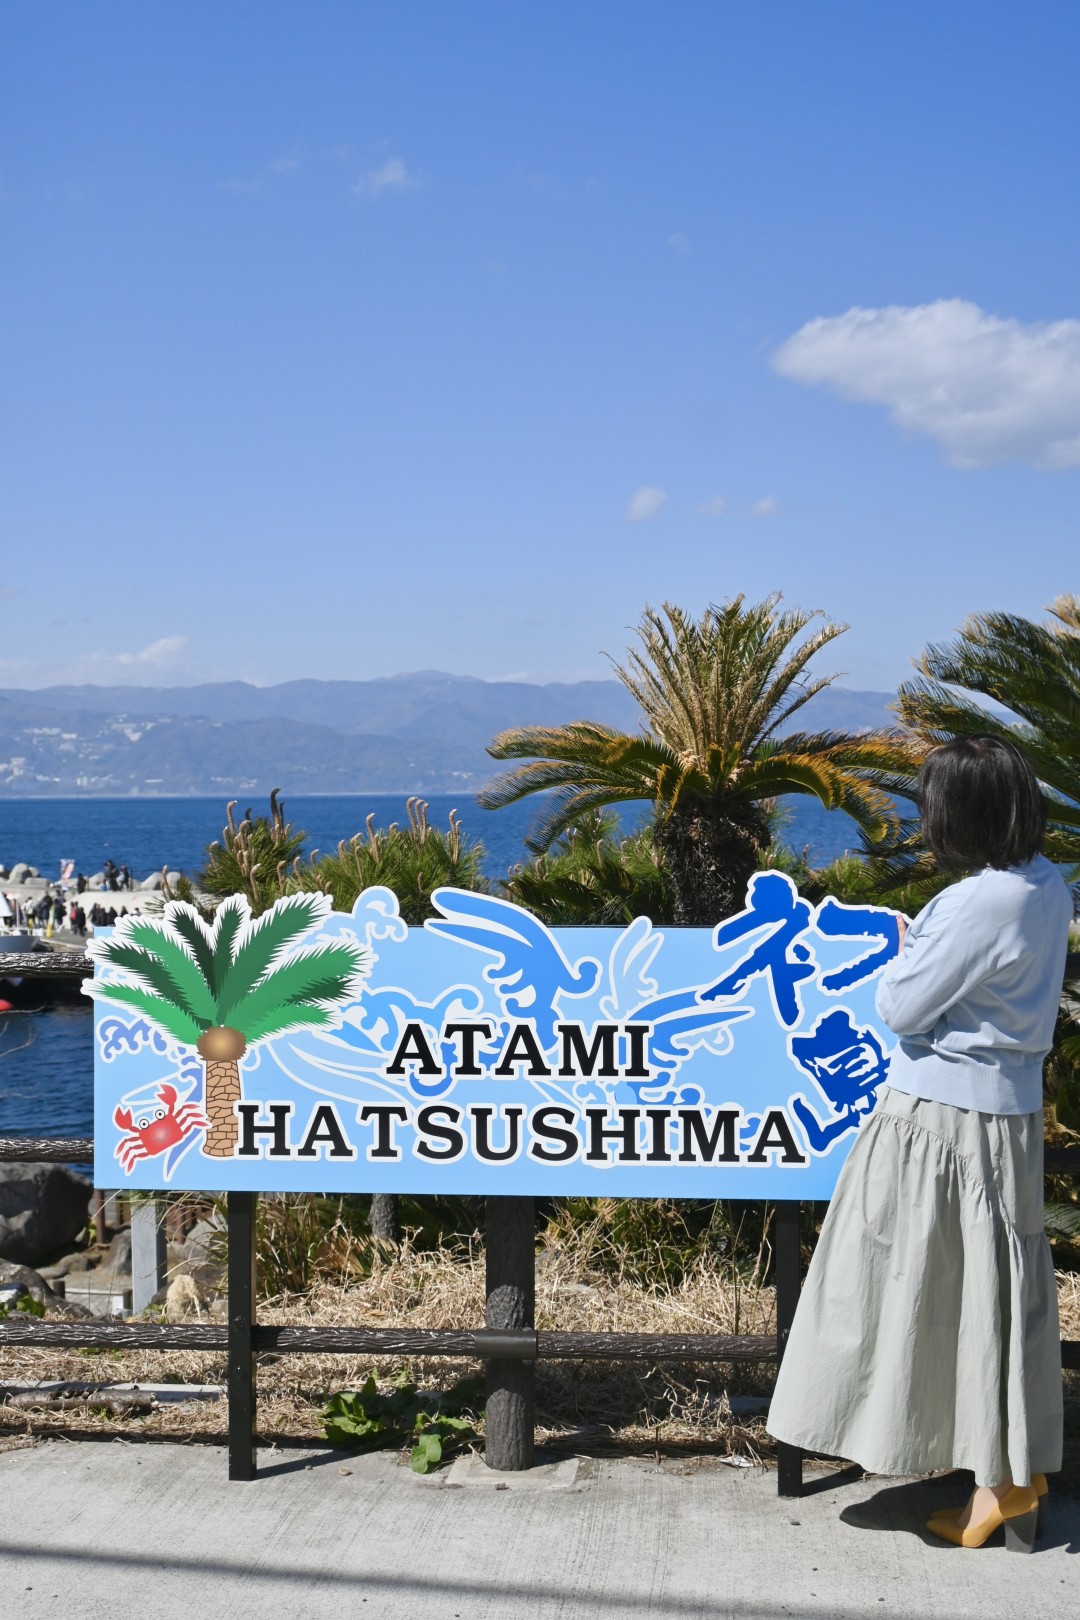 ATAMI HATSUSHIMA